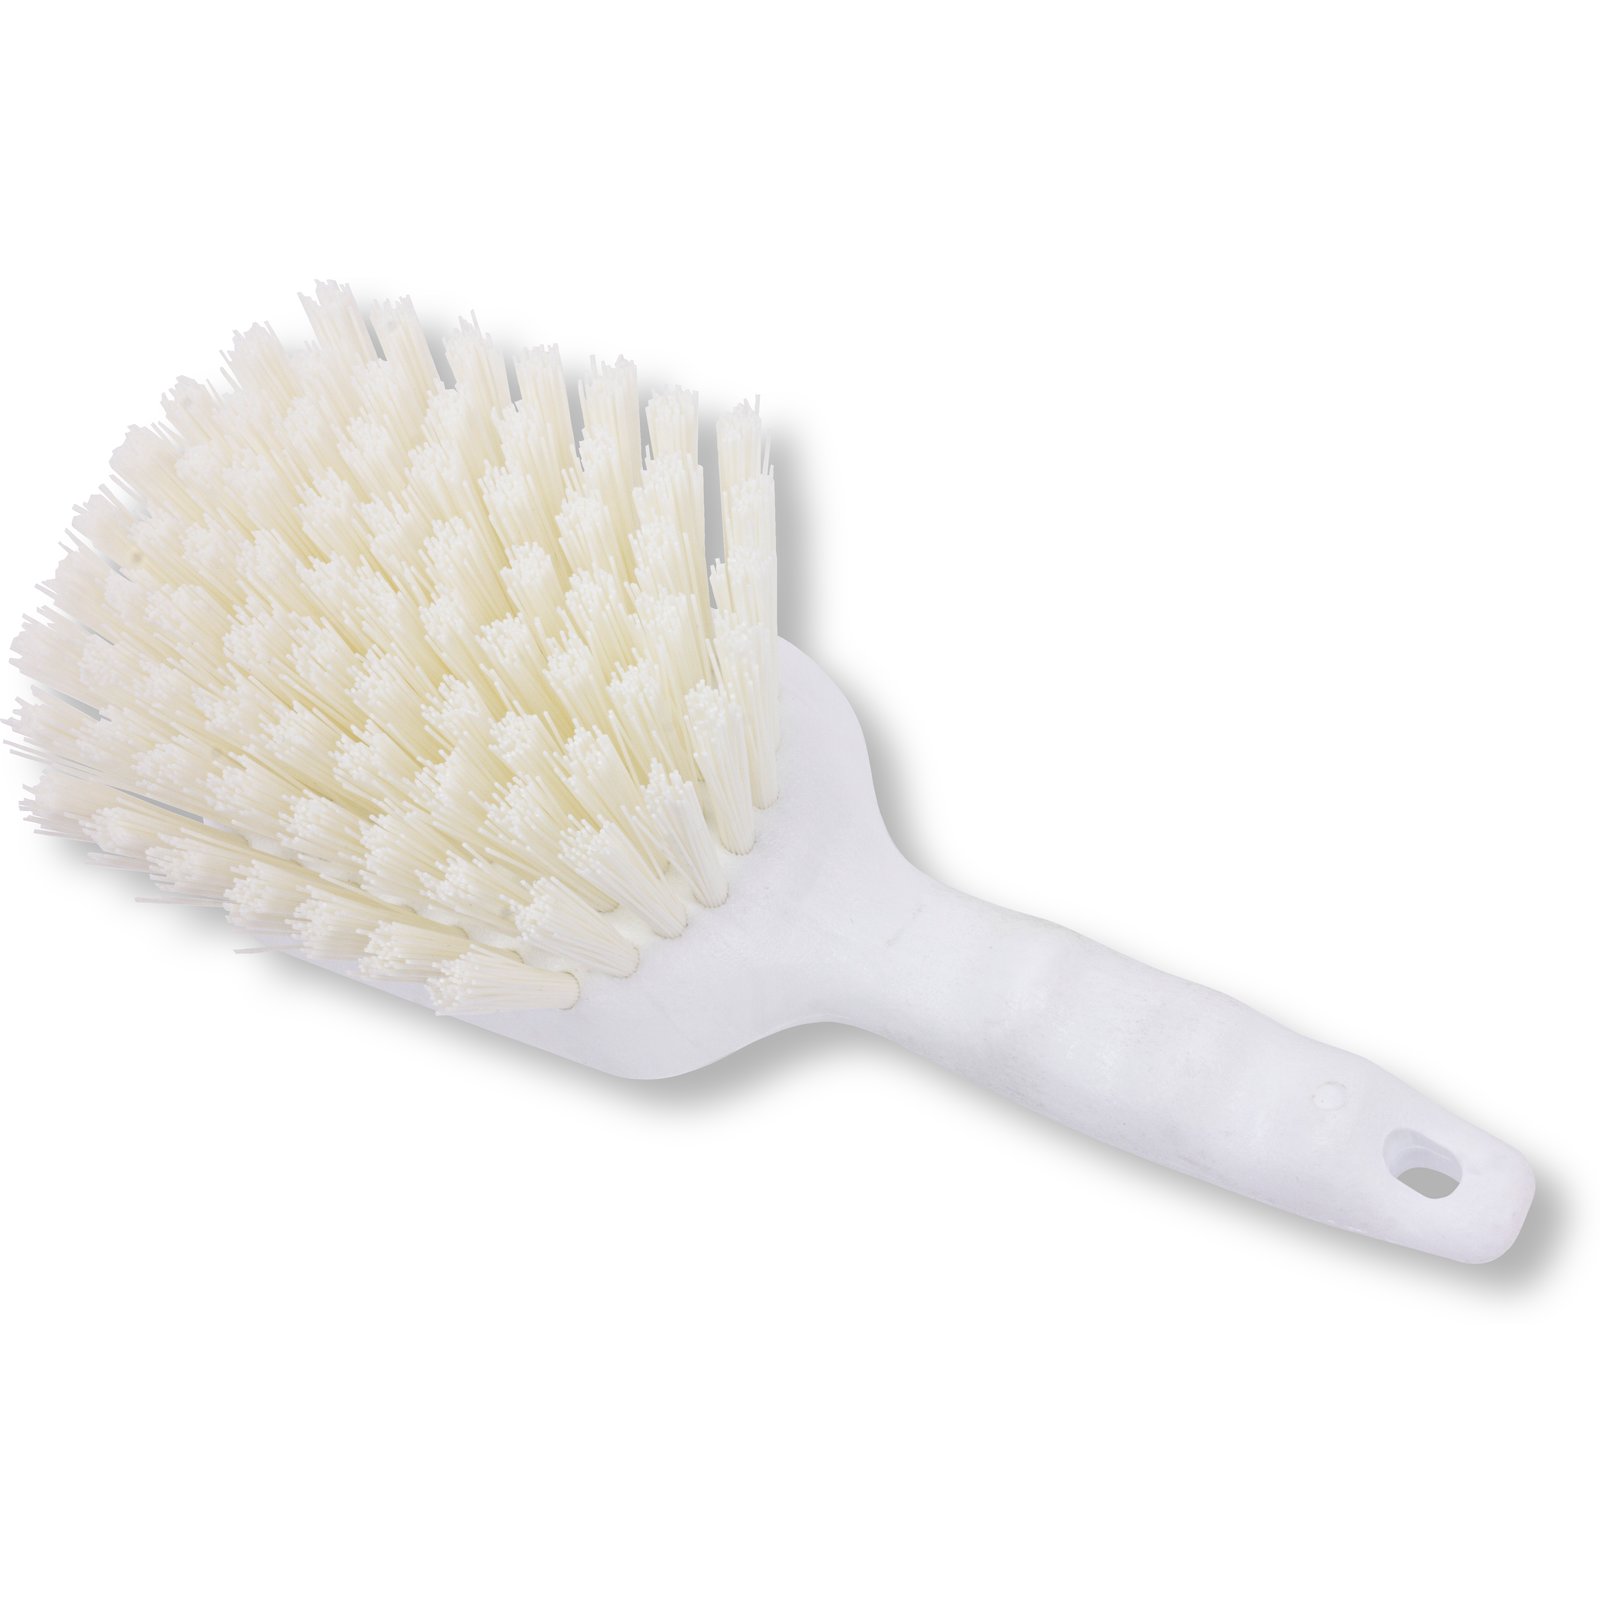 CaddyClean 0.25 Soft White Scrub Brush - 2 pieces